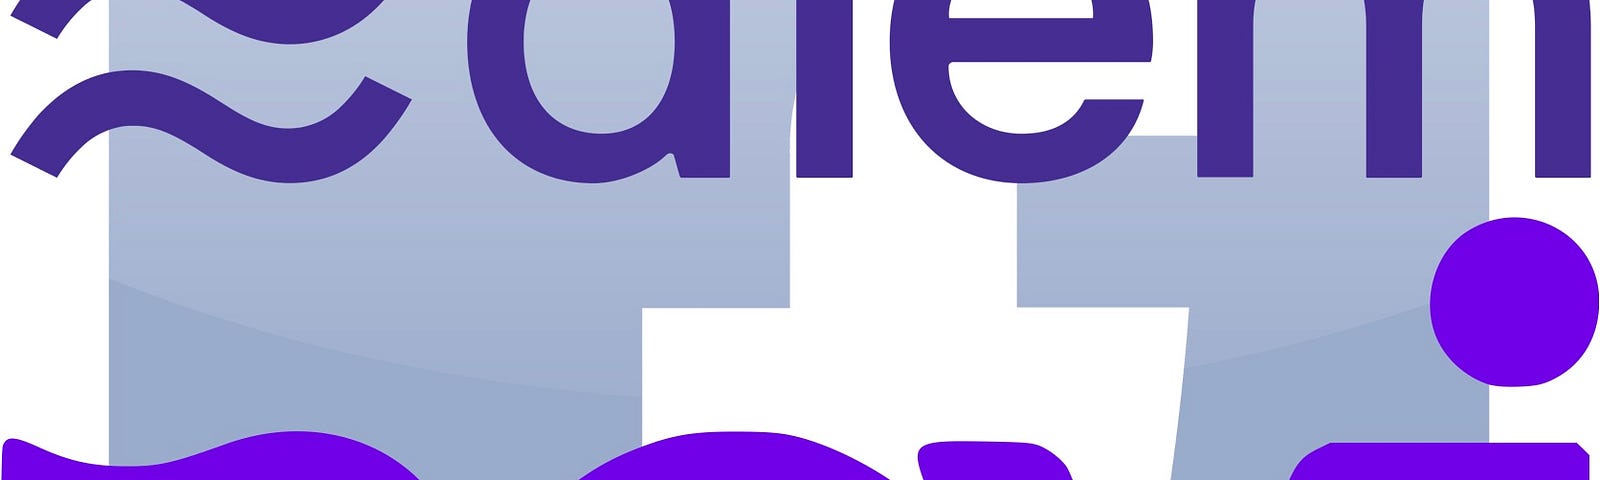 IMAGE: Diem and Novi logos on top of a semitransparent Facebook logo